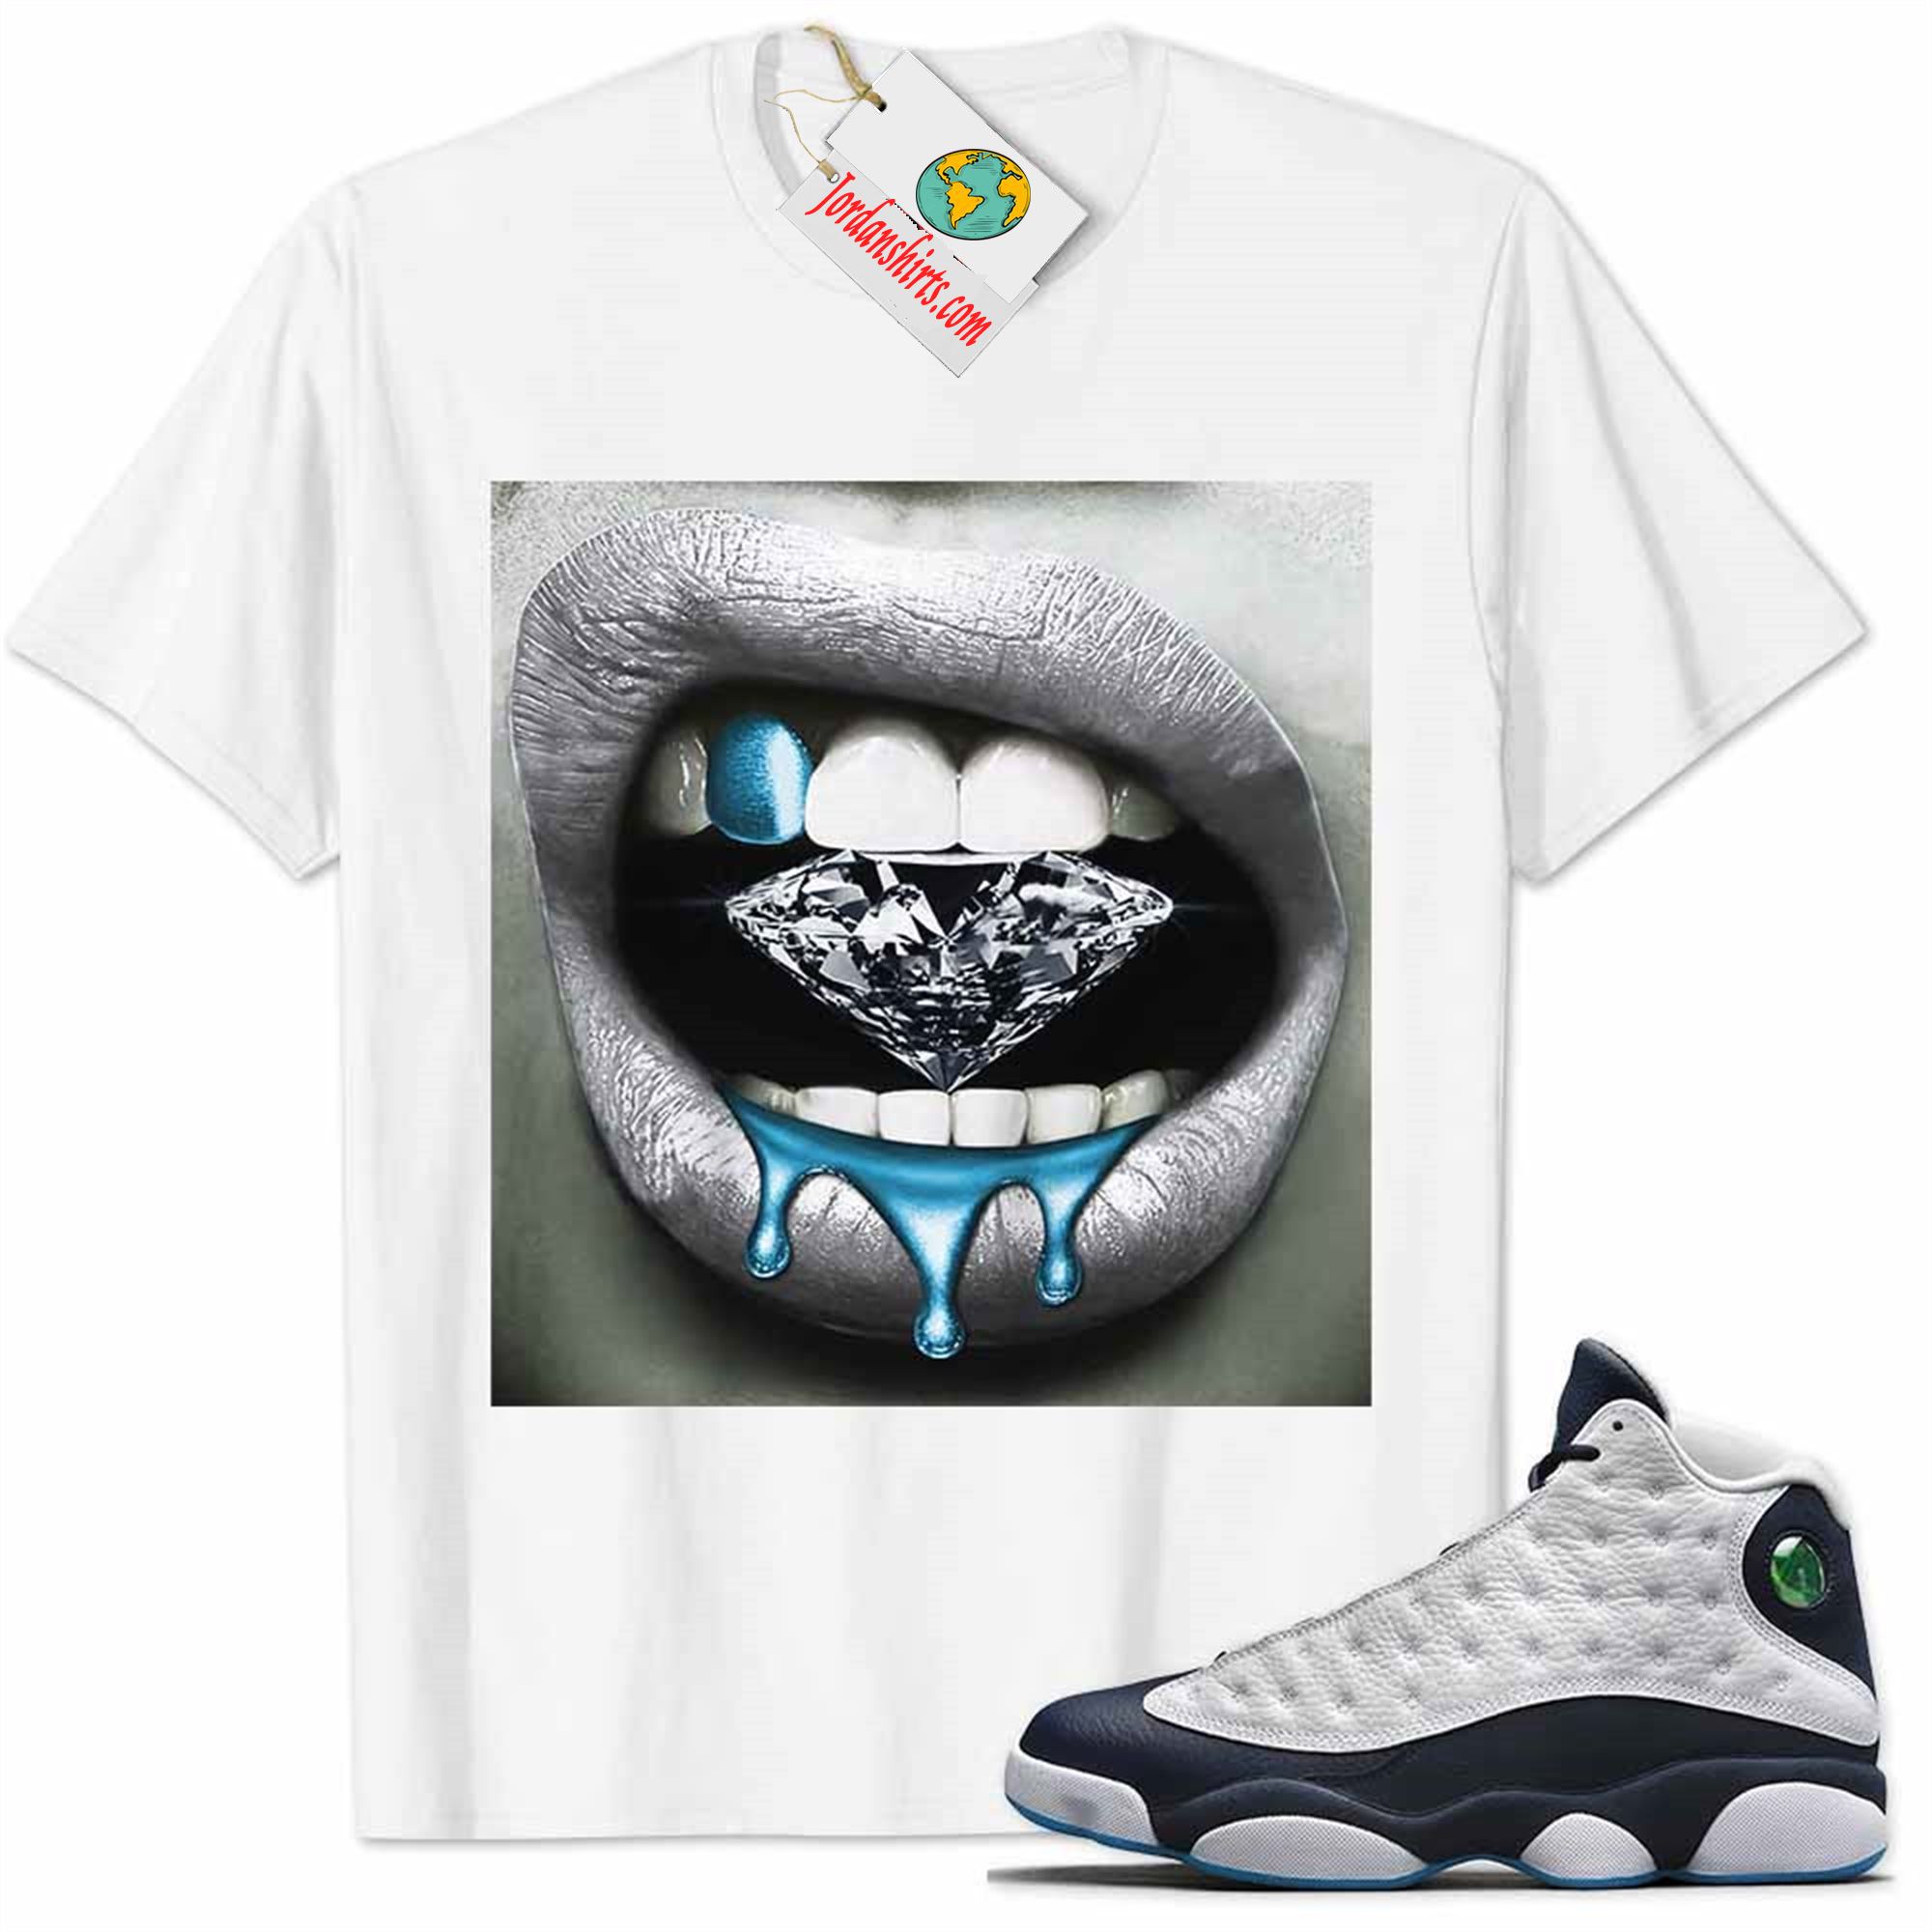 Jordan 13 Shirt, Jordan 13 Obsidian Shirt Sexy Lip Bite Diamond Dripping White Full Size Up To 5xl